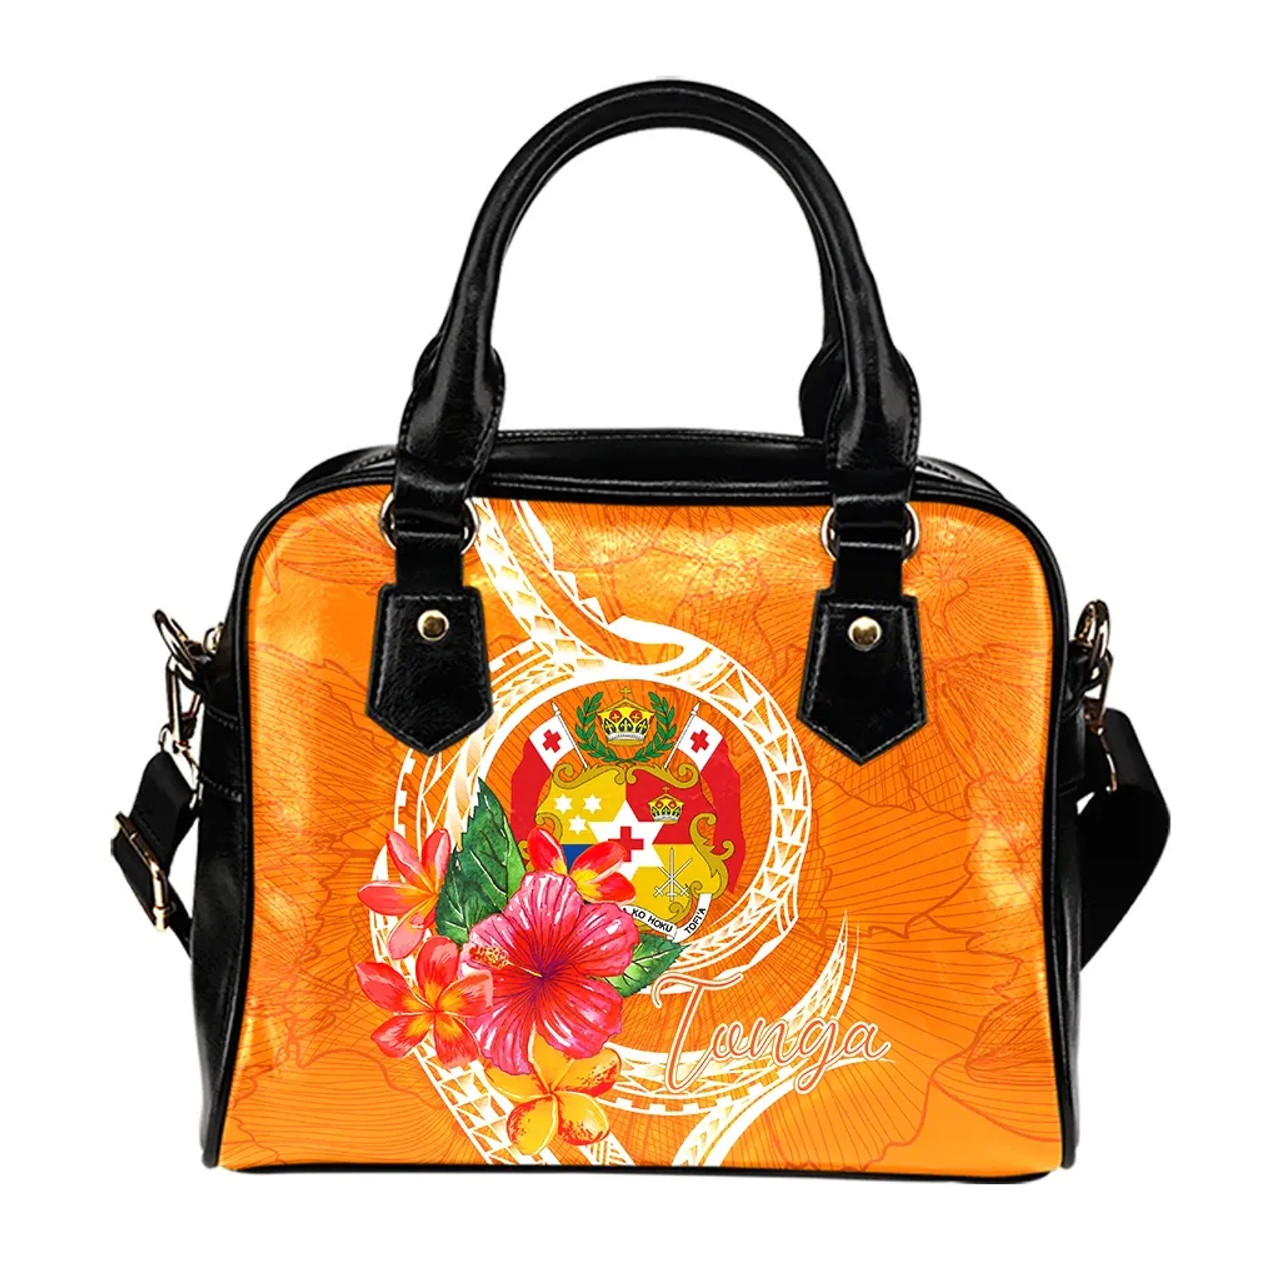 Tonga Polynesian Shoulder Handbag - Orange Floral With Seal 1